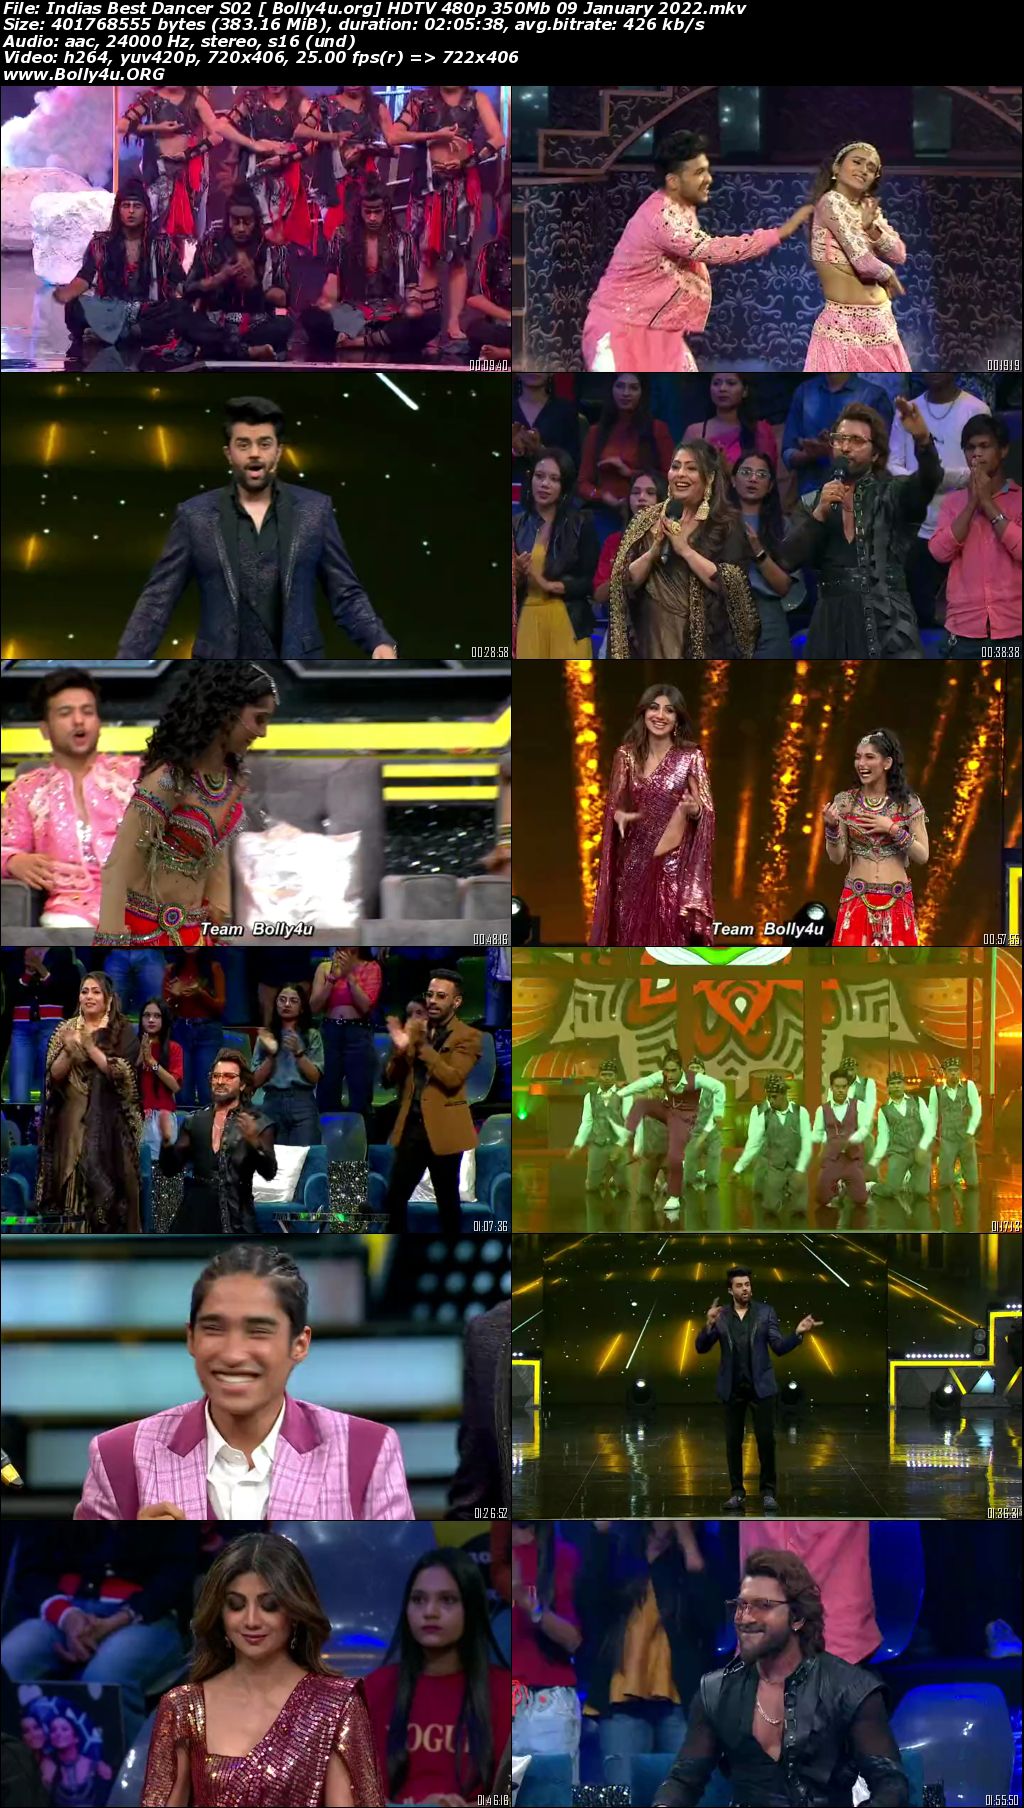 Indias Best Dancer S02 HDTV 480p 350Mb 09 January 2022 Download